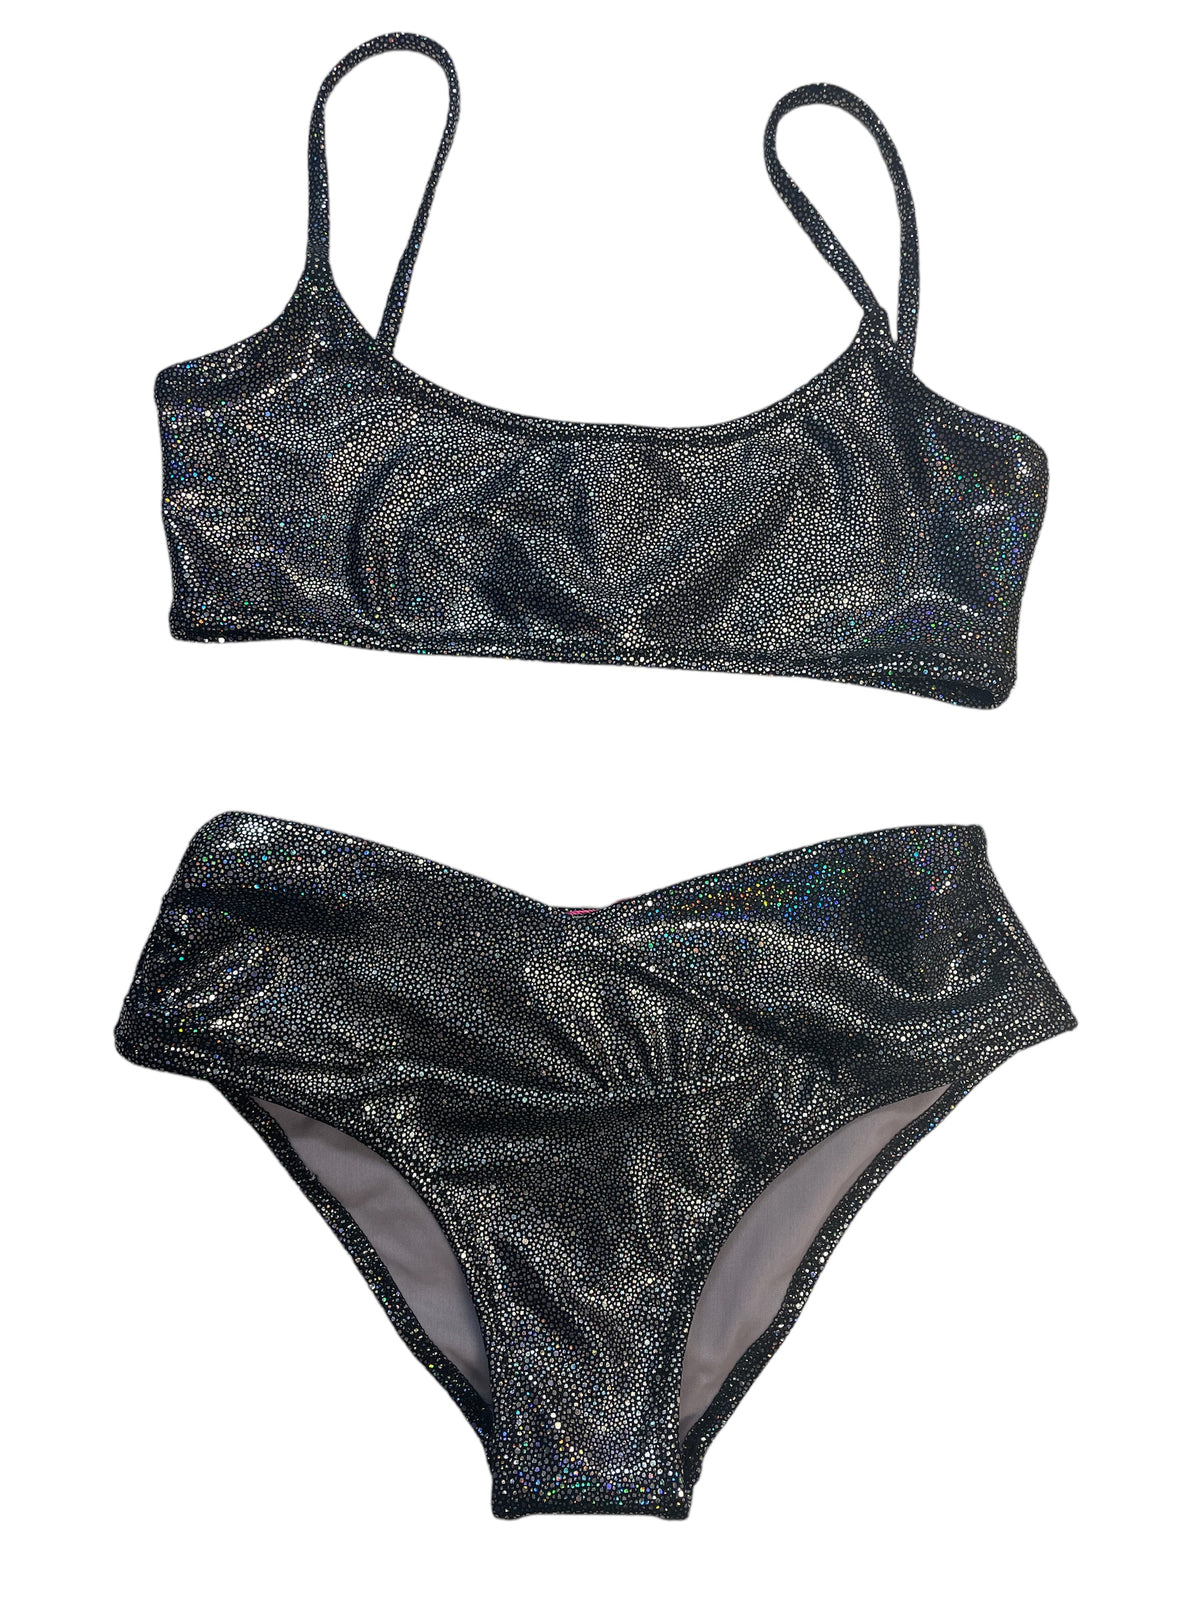 Piccoli Principi Amelie 2pc Swimsuit - Black Glitter